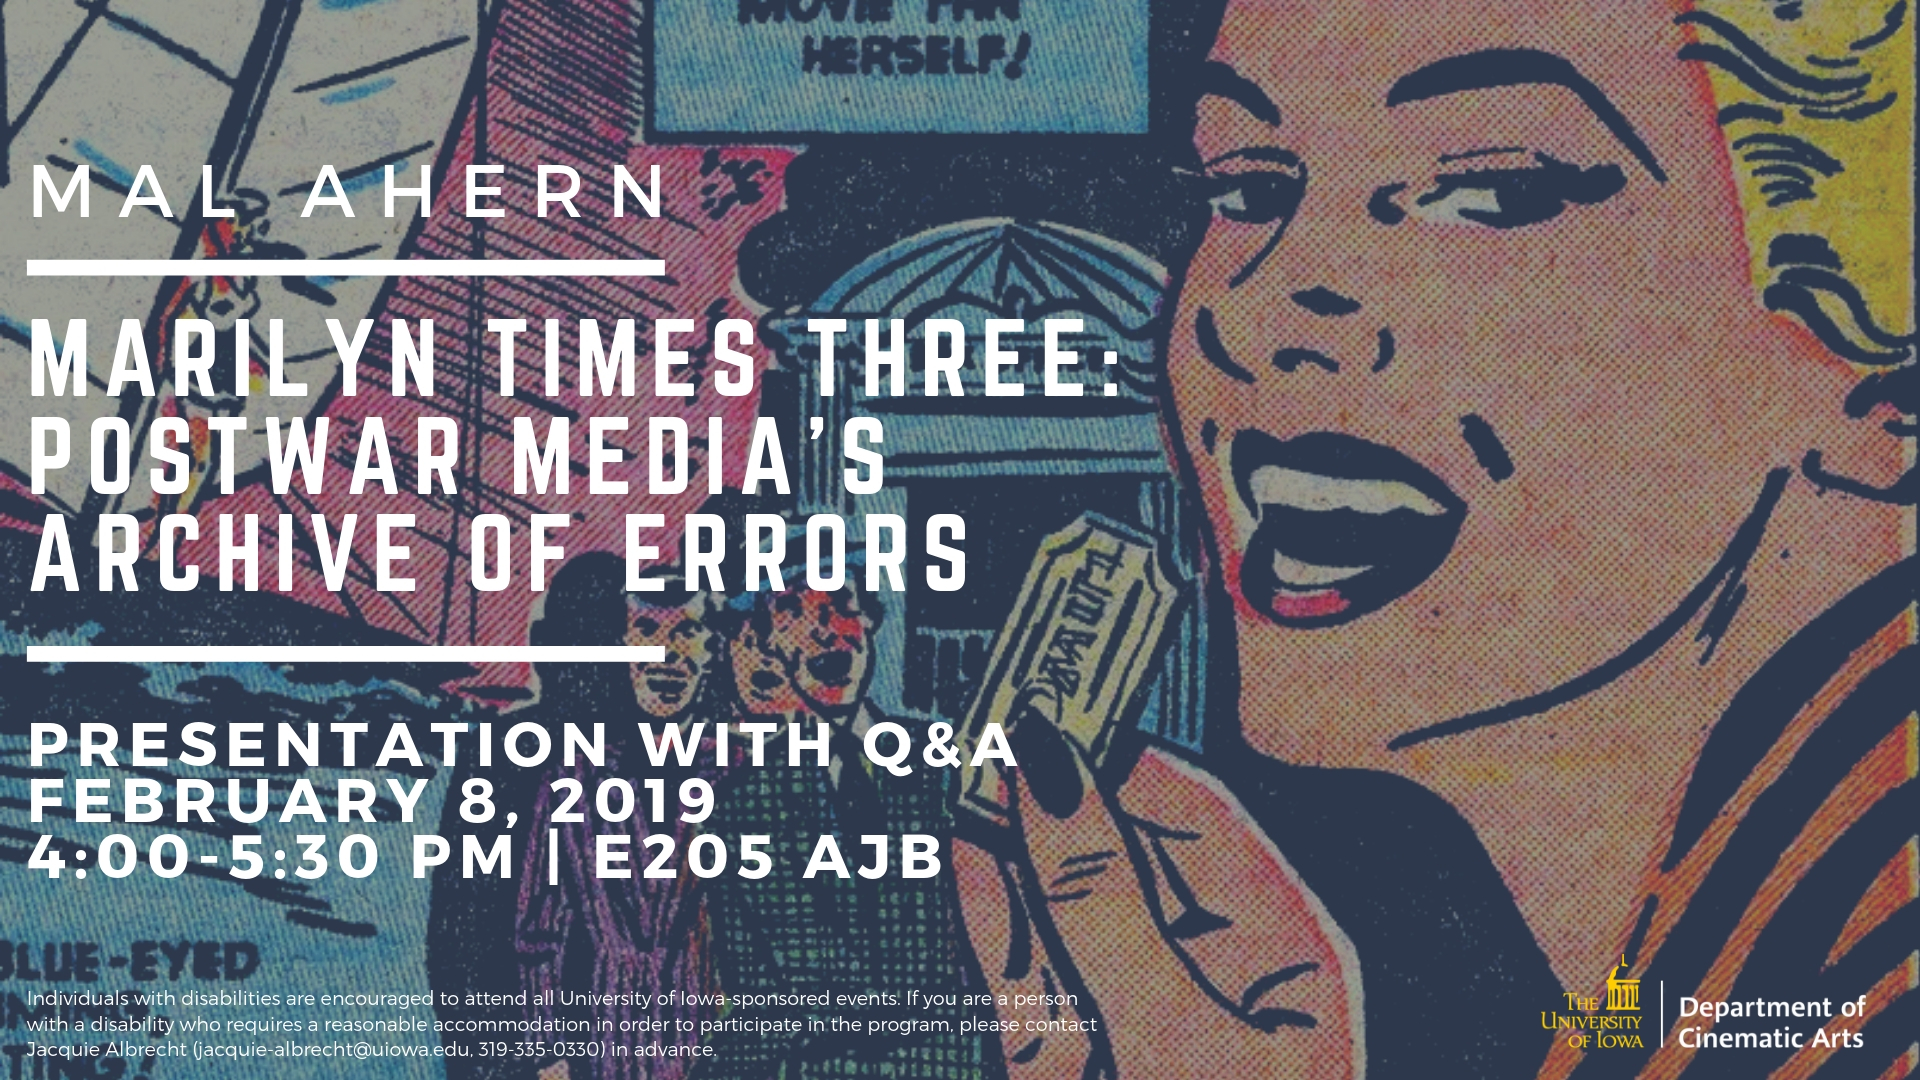 Mal Ahern - Marilyn Times Three: Postwar Media's Archive of Errors: Presentation with Q&A, February 8, 2019, 4:00-5:30 PM, E205 AJB